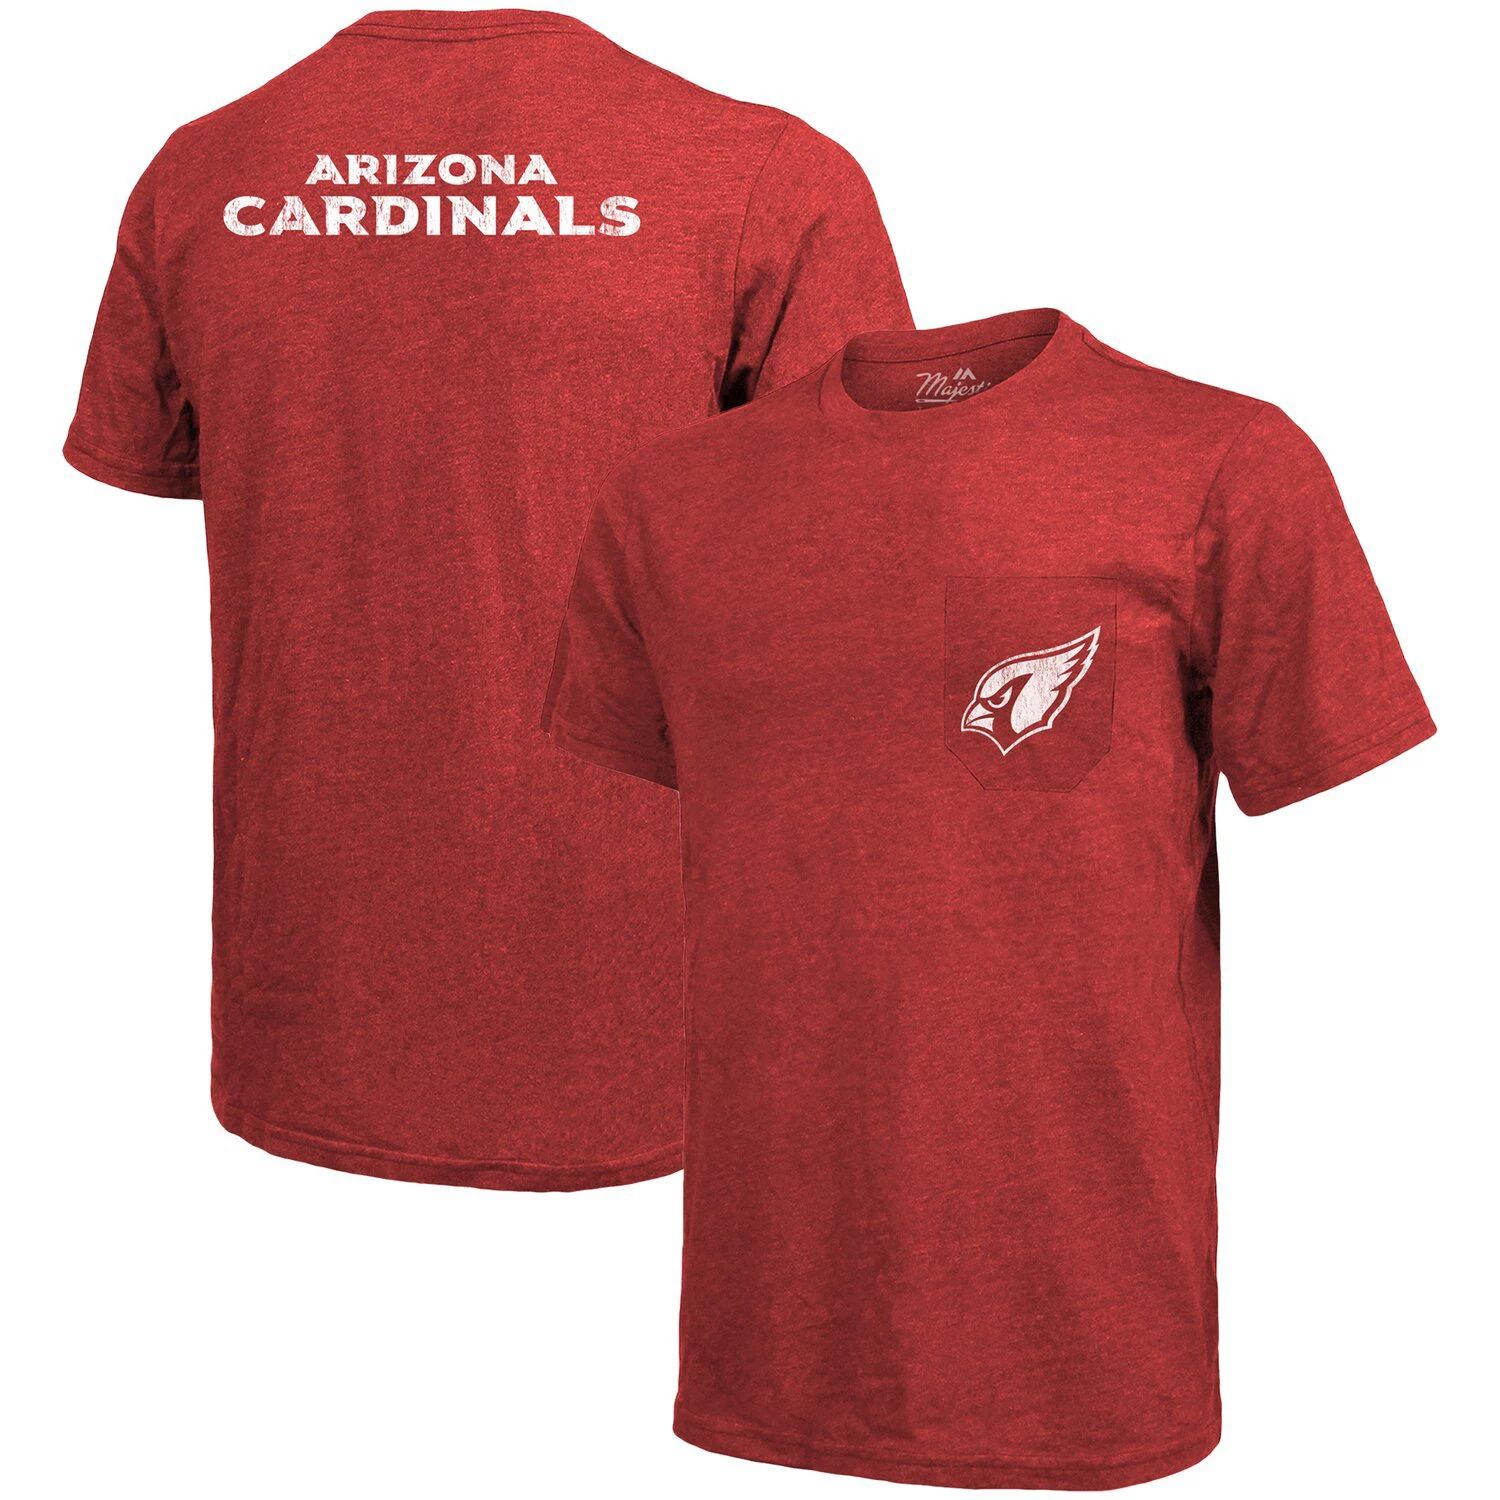 Футболка с карманами Tri-Blend Arizona Cardinals Threads - Cardinal Majestic футболка с карманами tri blend arizona cardinals threads cardinal majestic